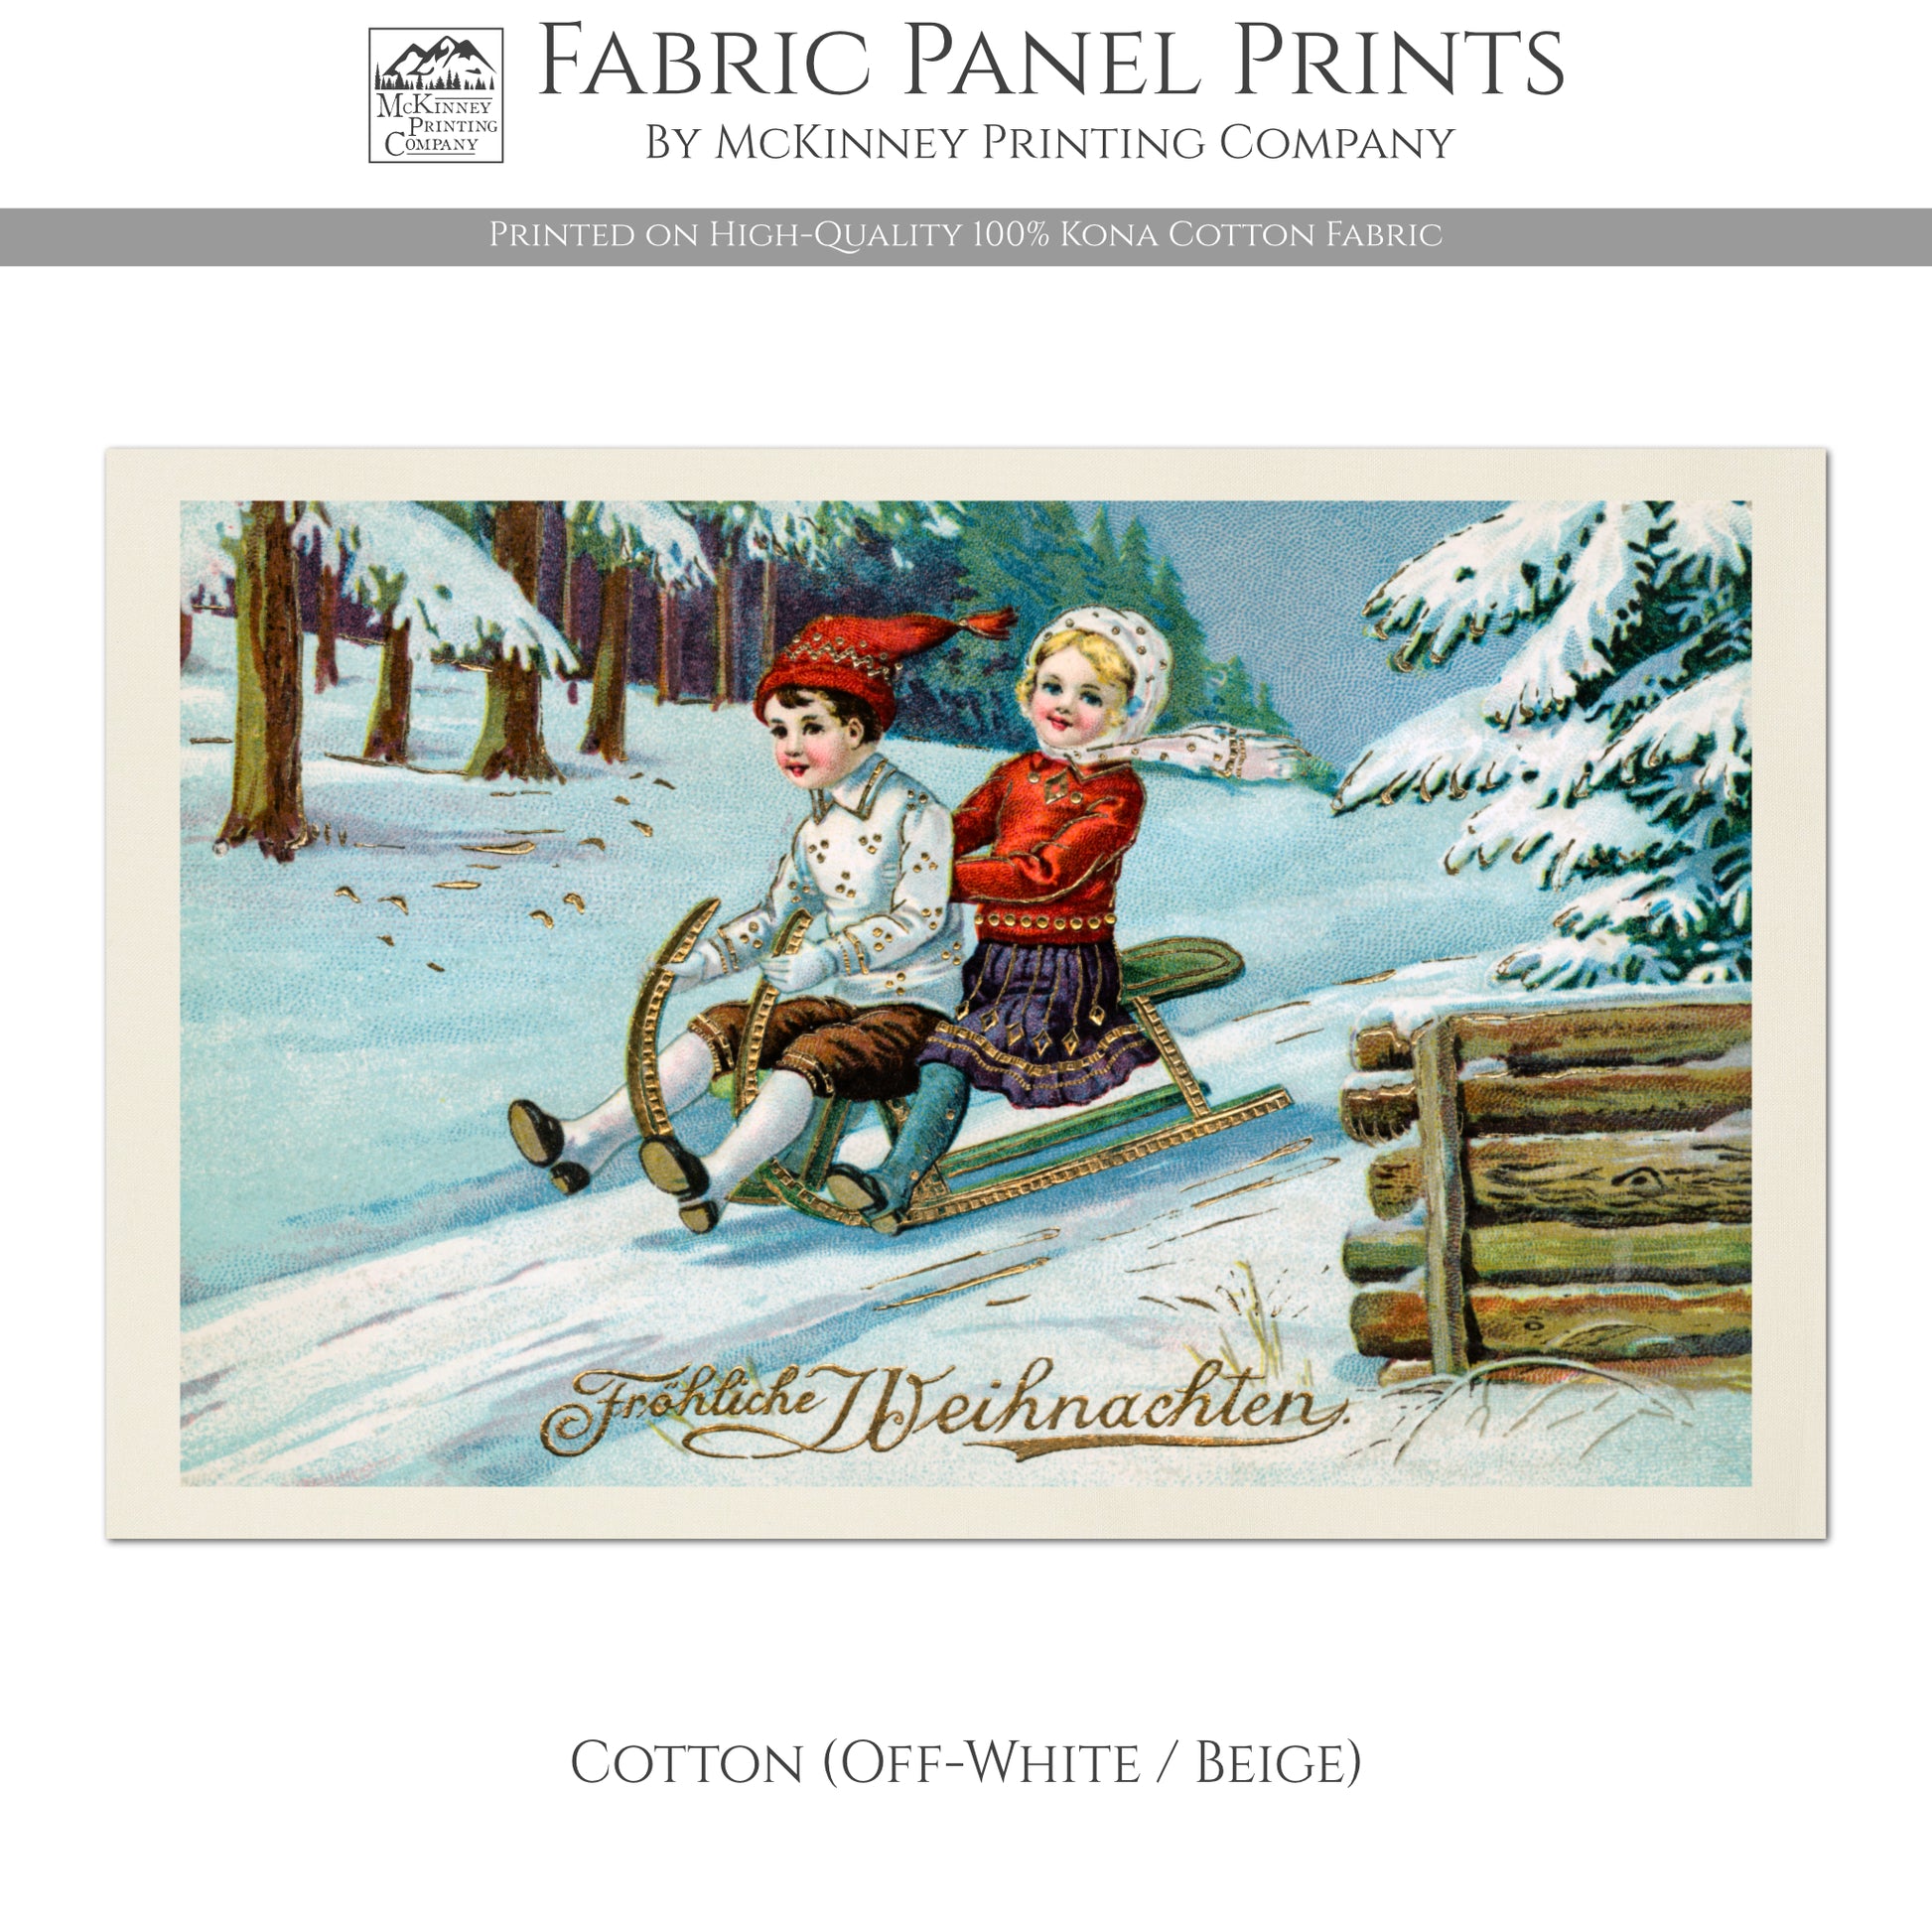 Children Sledding, Christmas Fabric Panel, Victorian Decor, Antique, Vintage, Fabric Panel Print - Cotton